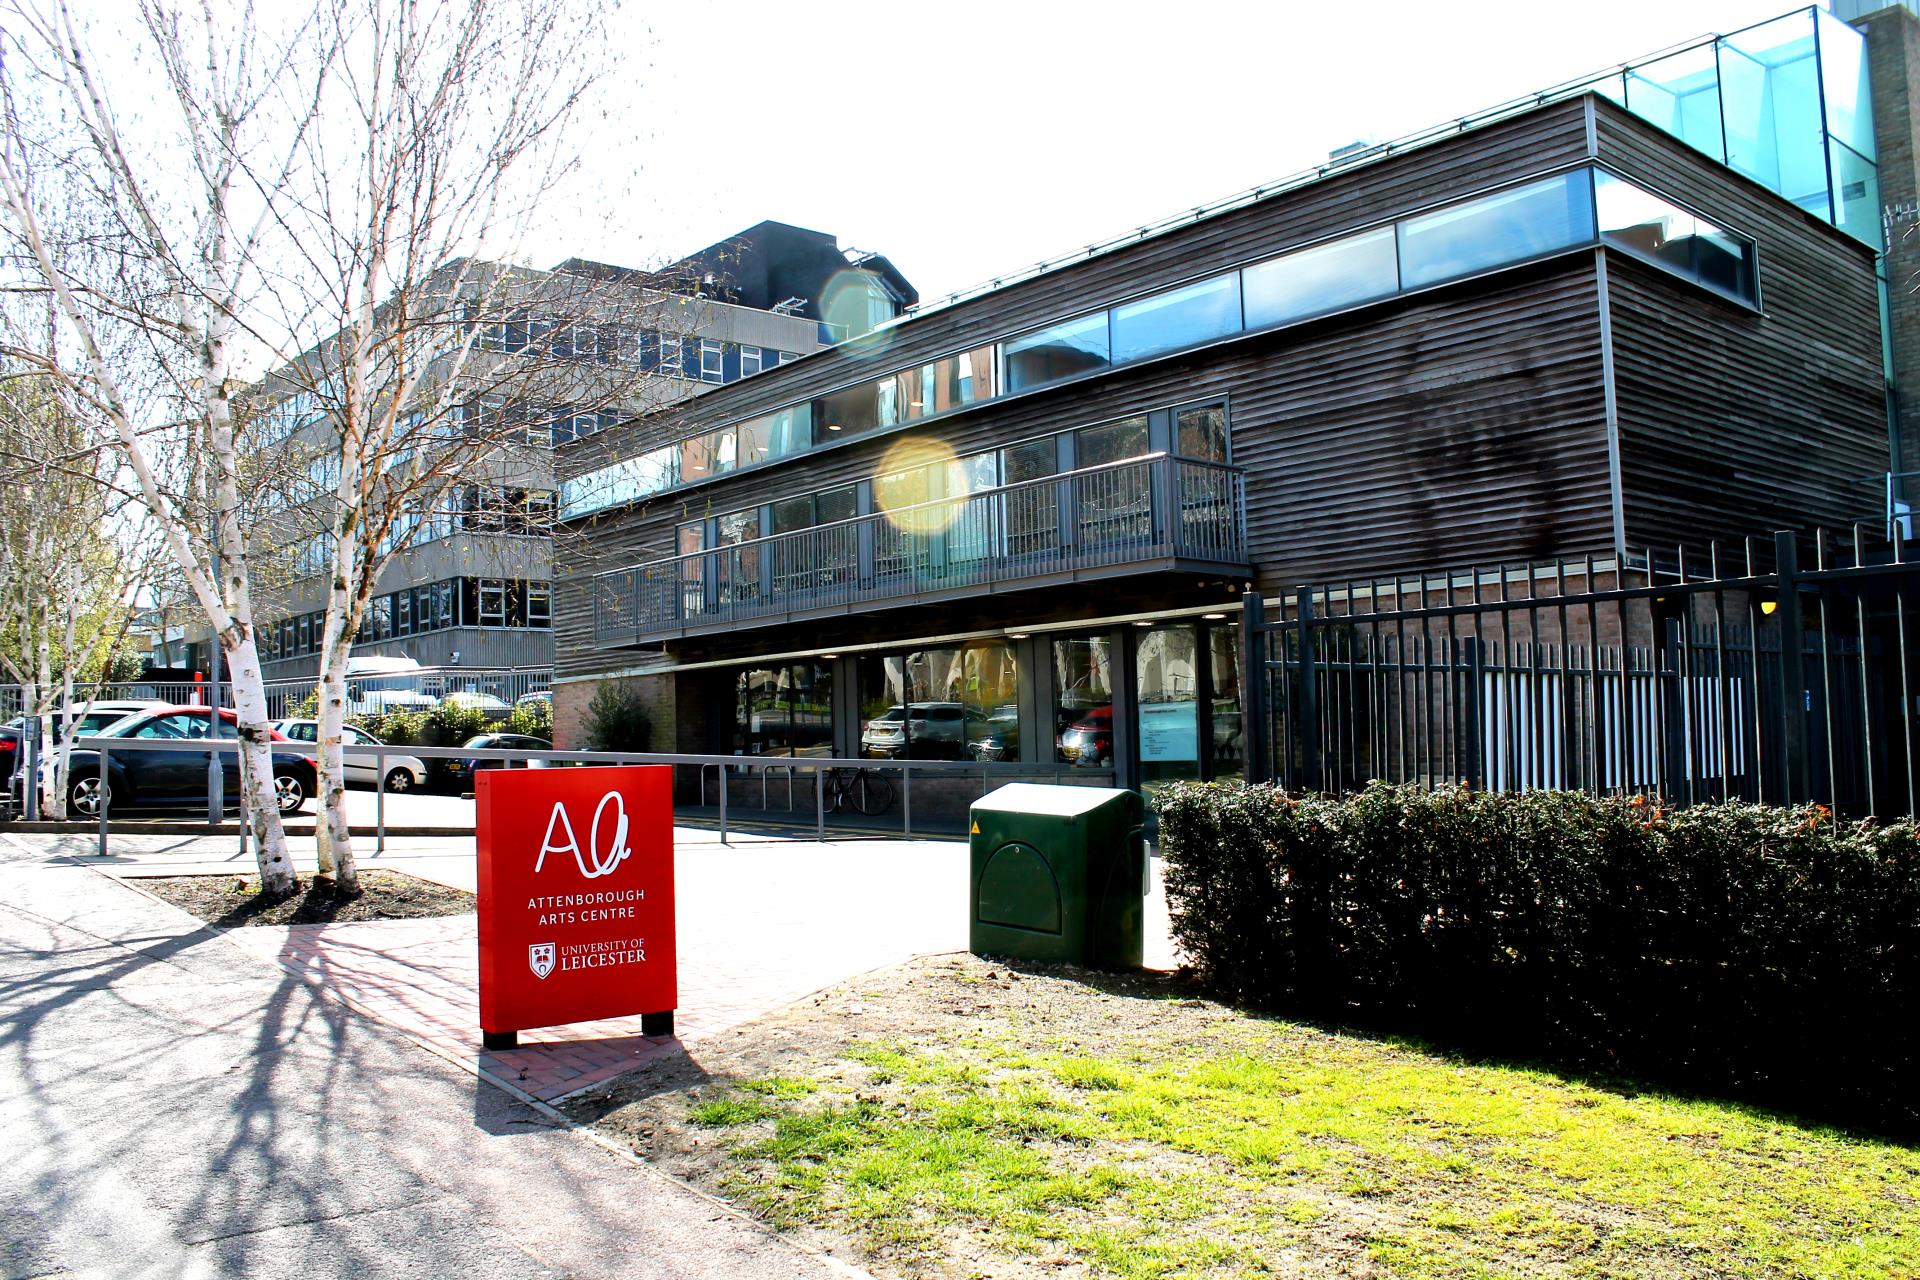 External image of Attenborough Arts Centre